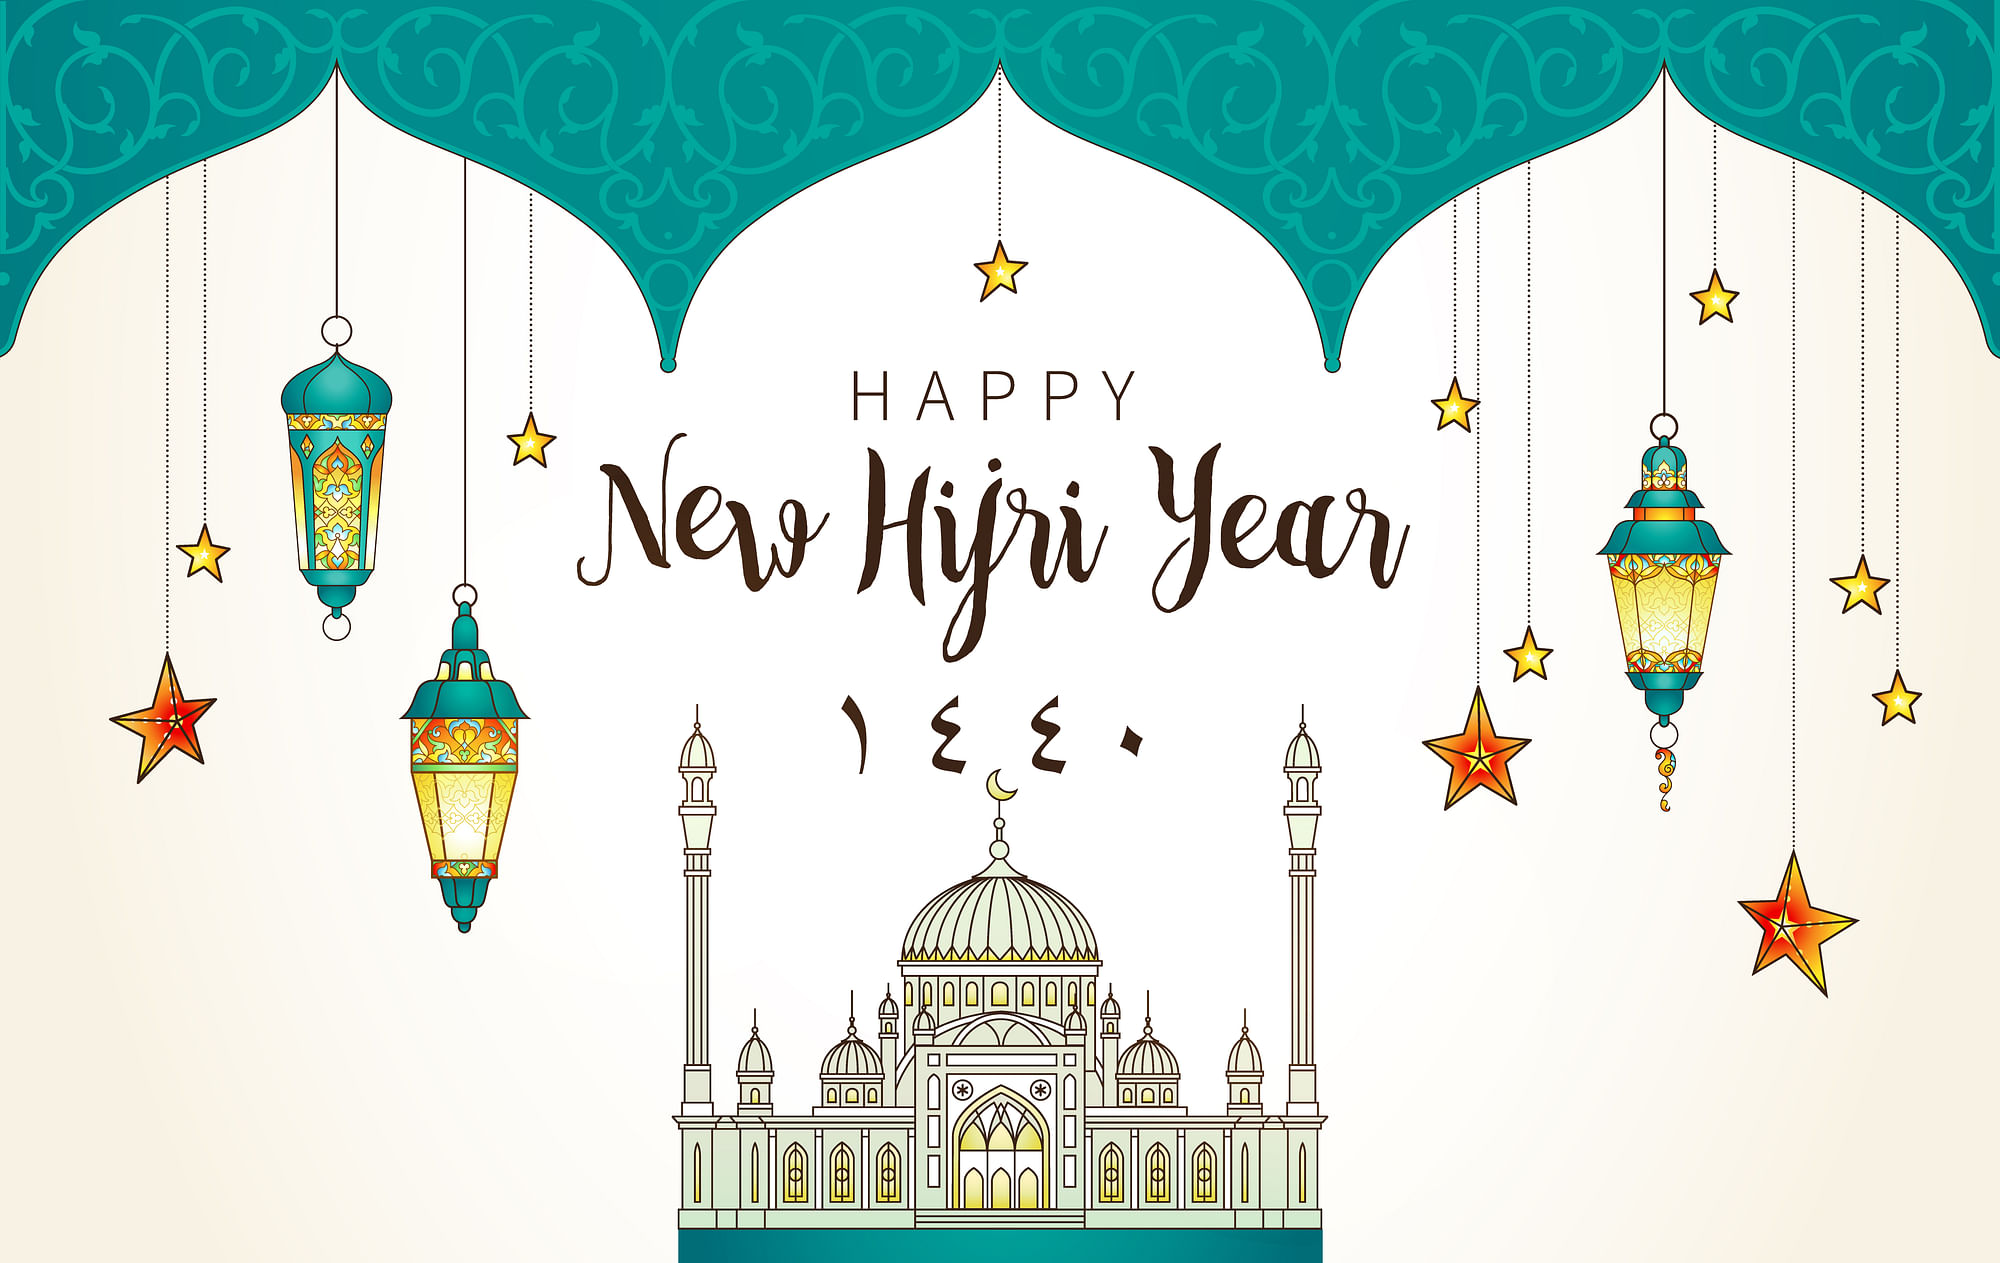 Hijri Islamic New Year 1441 Greeting in Arabic,Urdu,English,Hindi